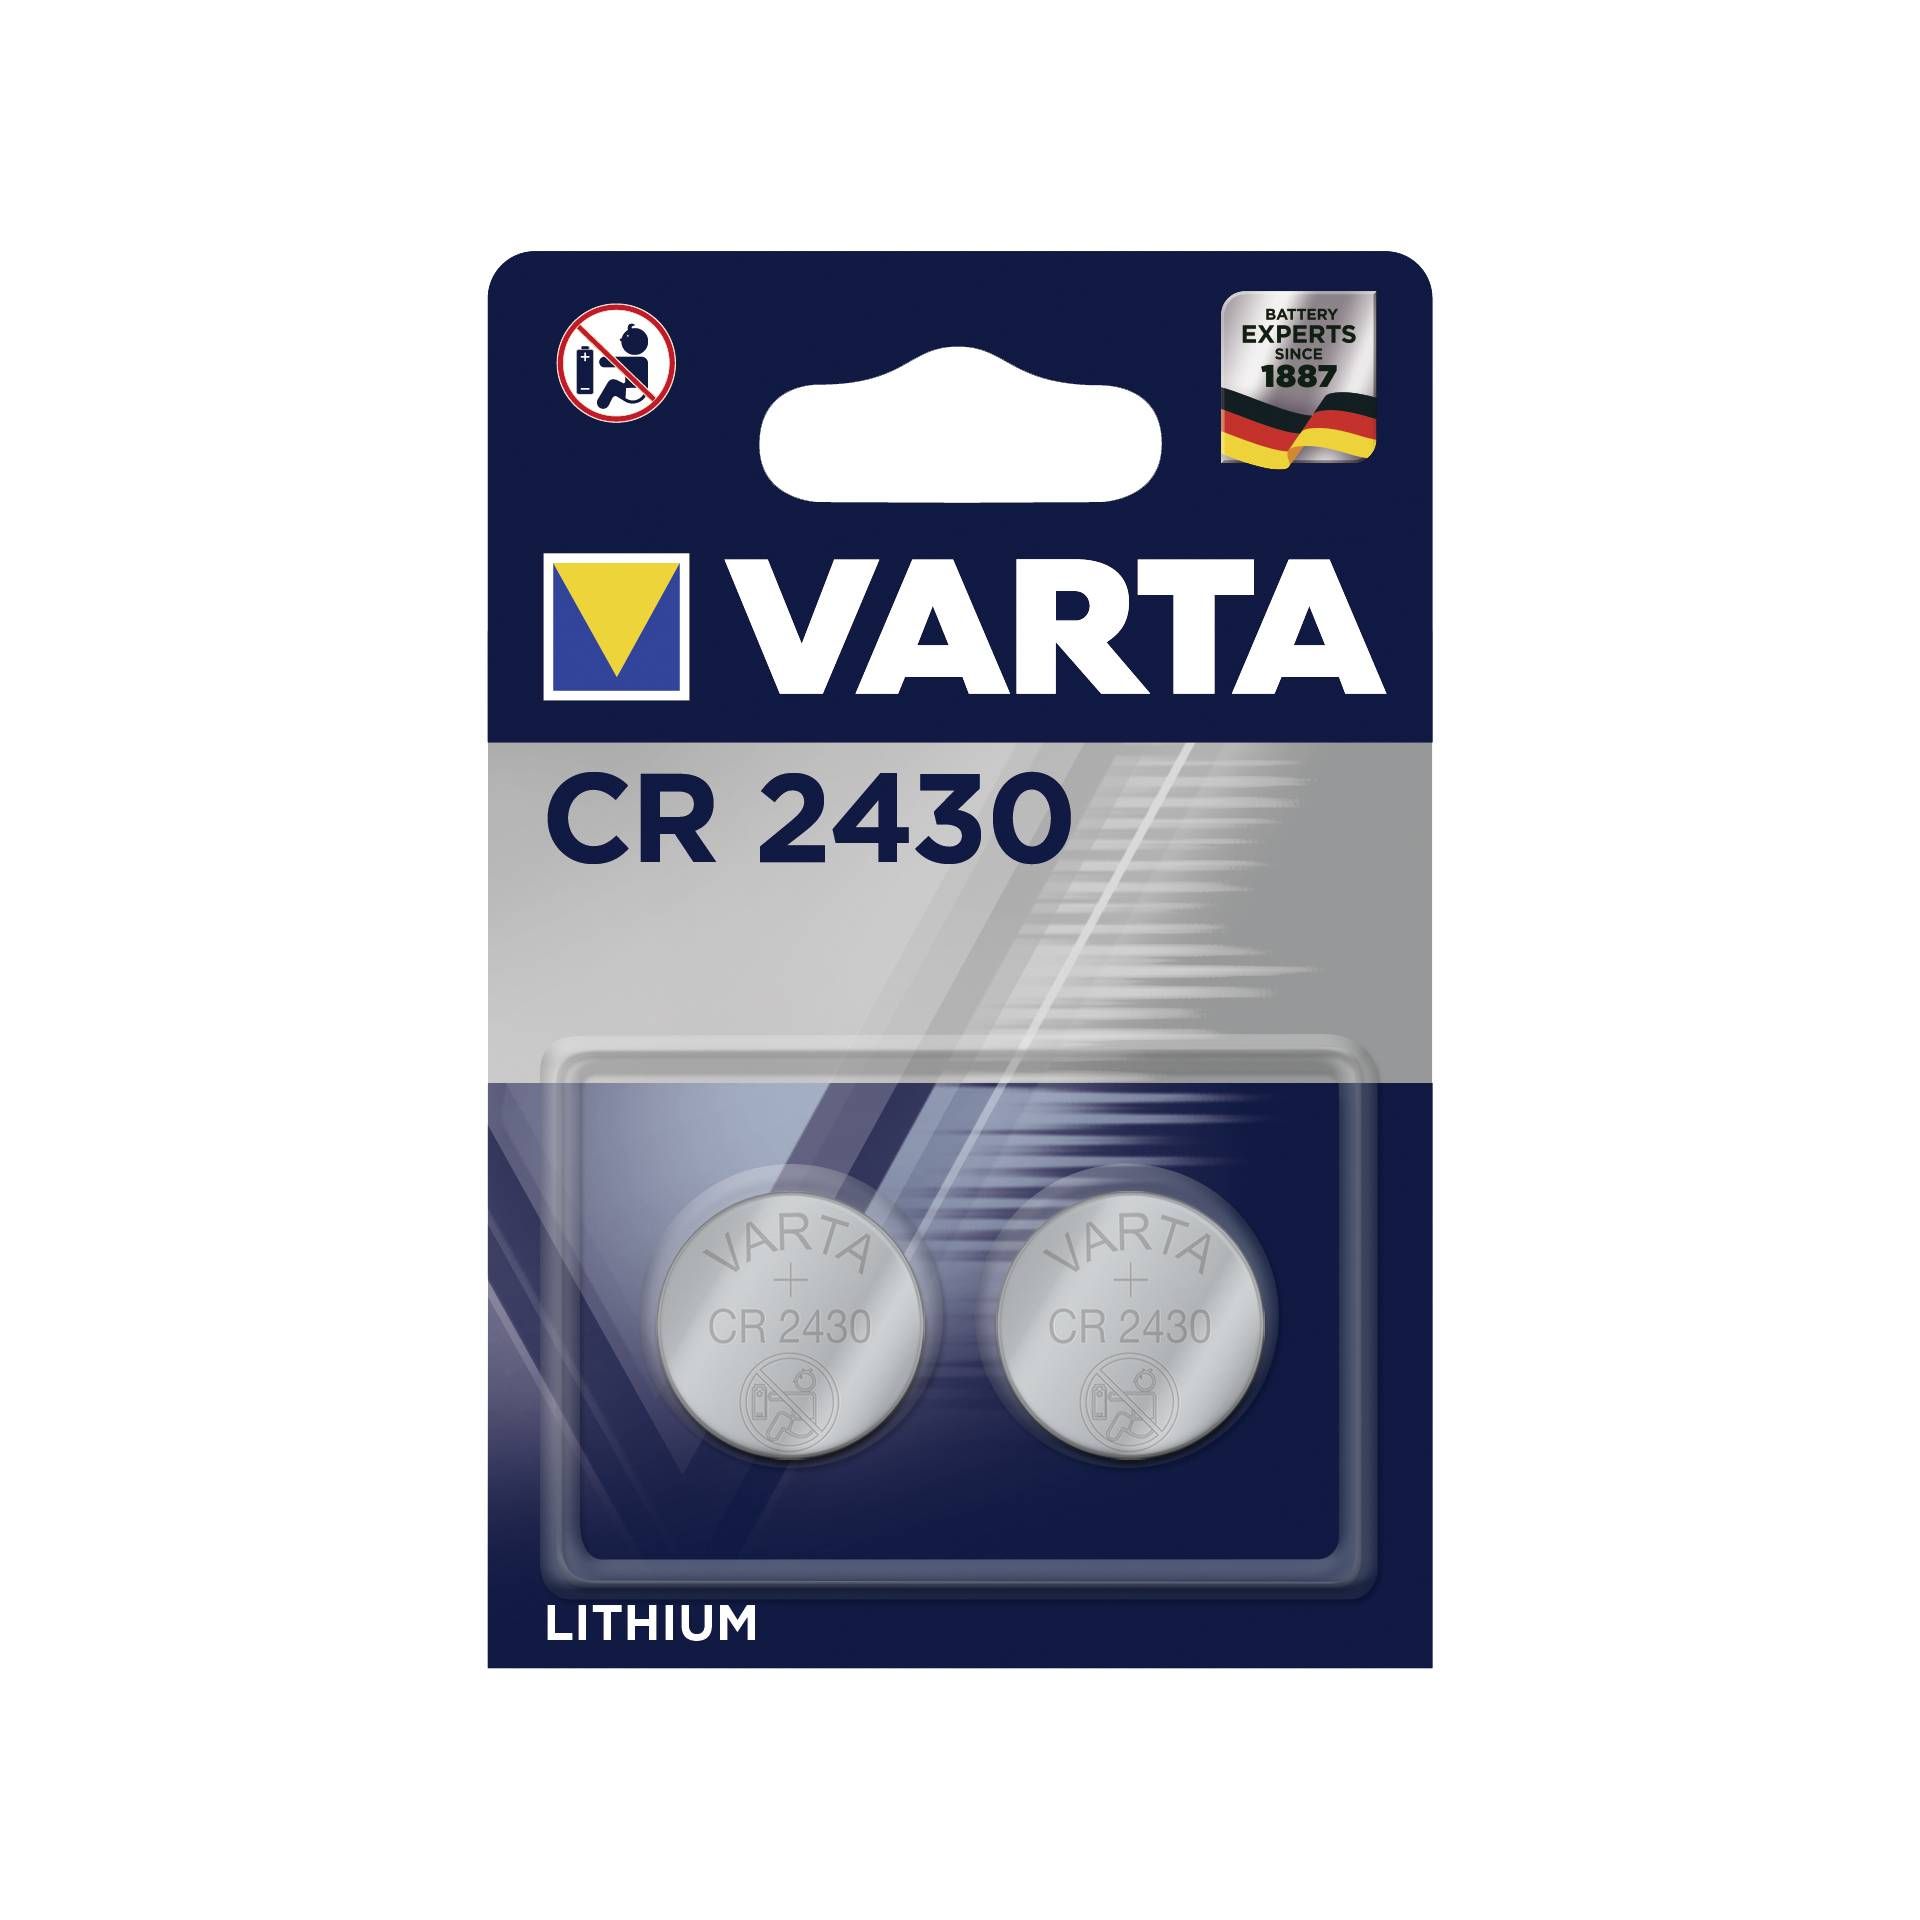 50x2 Varta electronic CR 2430